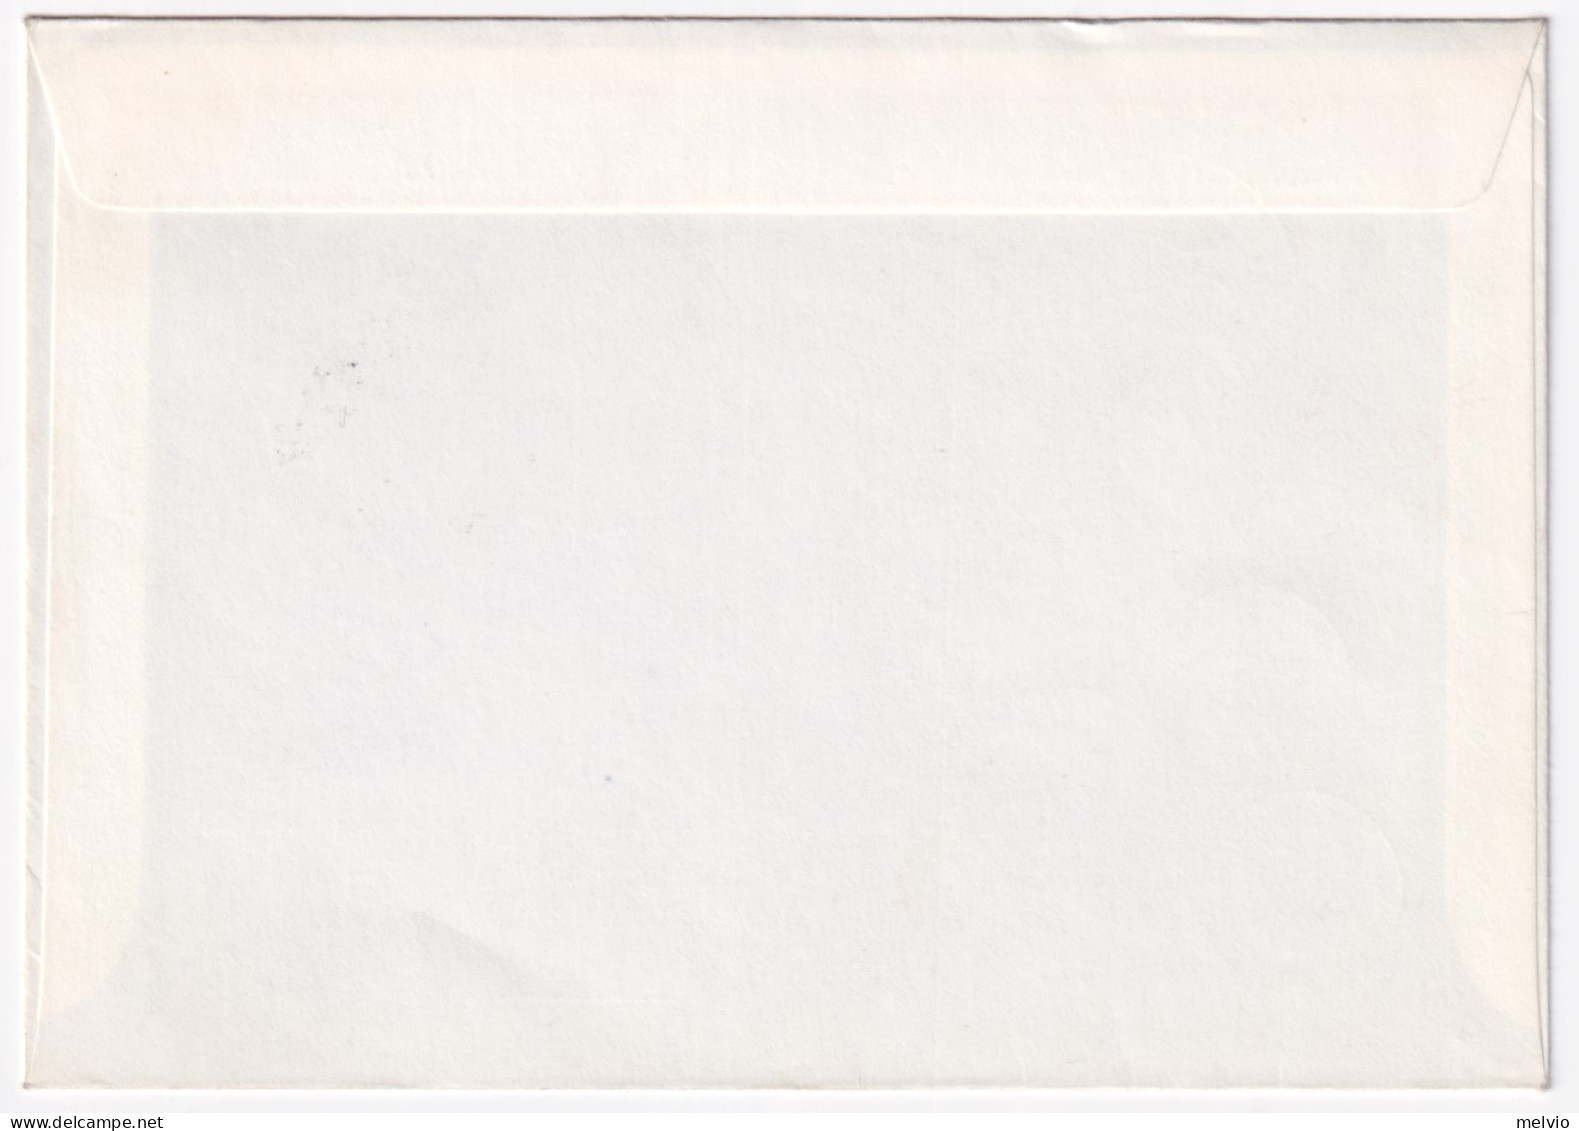 1971-Svizzera Esposizione Filatelica NABA (FG 21) Fdc Raccomandata - Covers & Documents